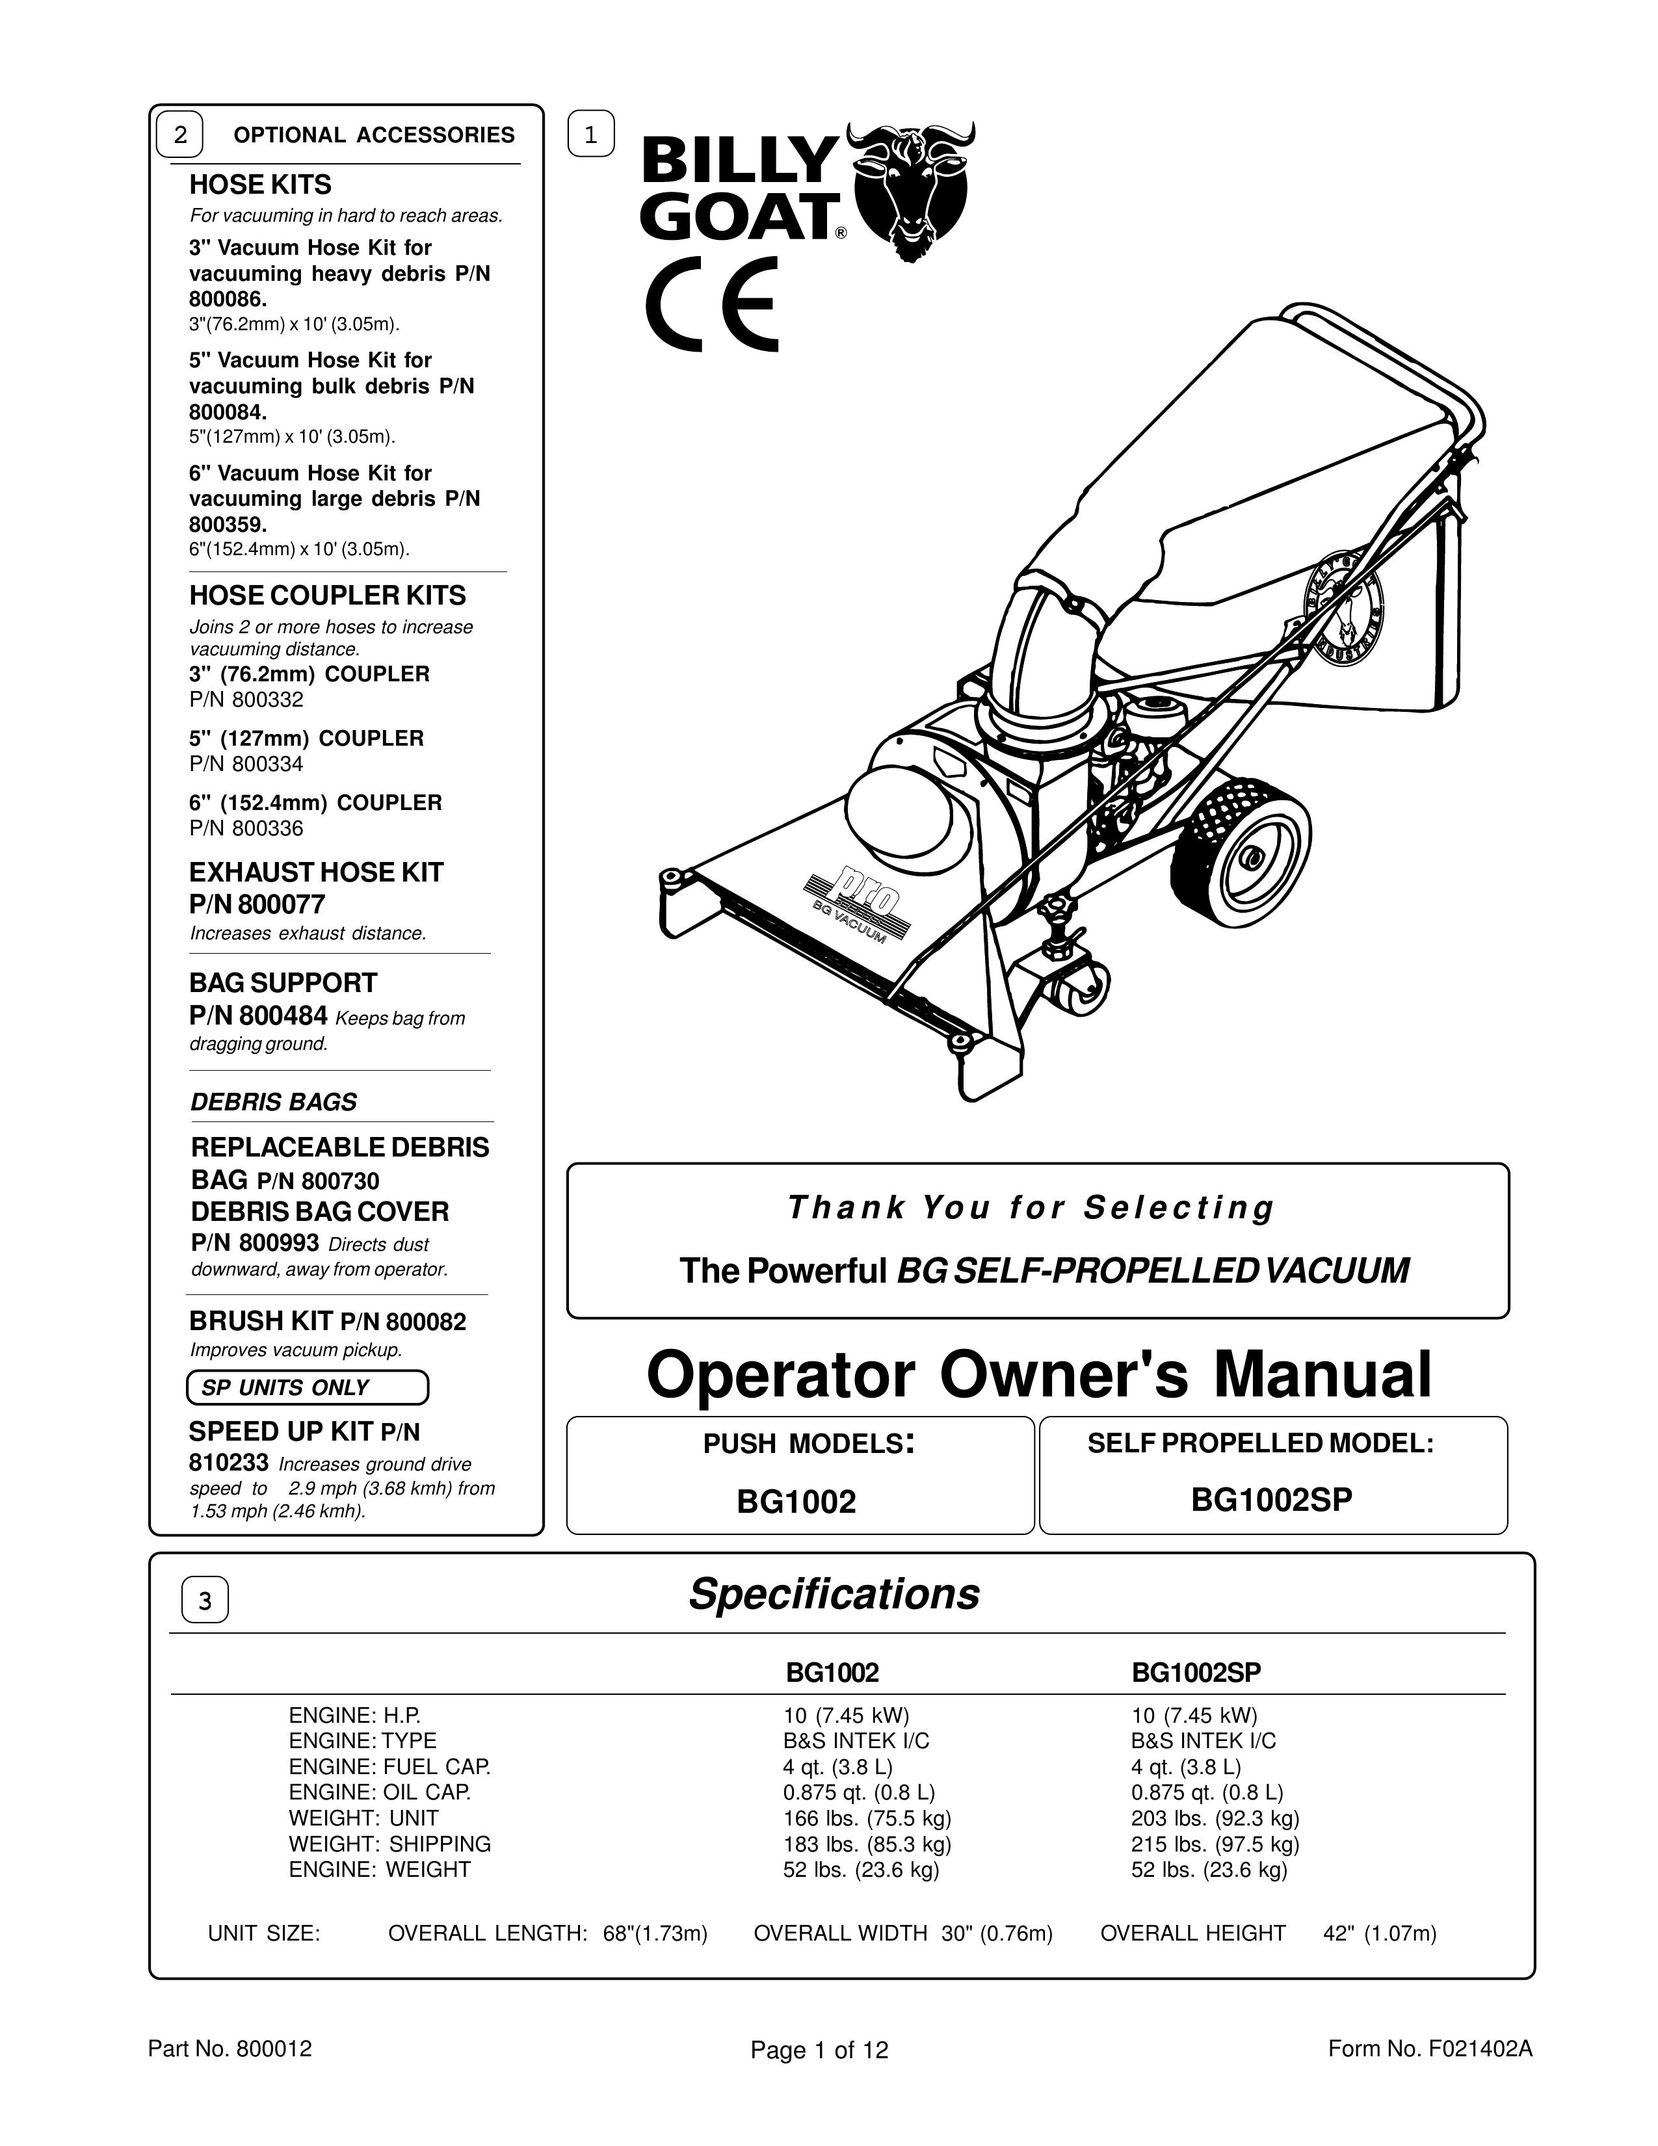 Billy Goat BG1002SP Vacuum Cleaner User Manual